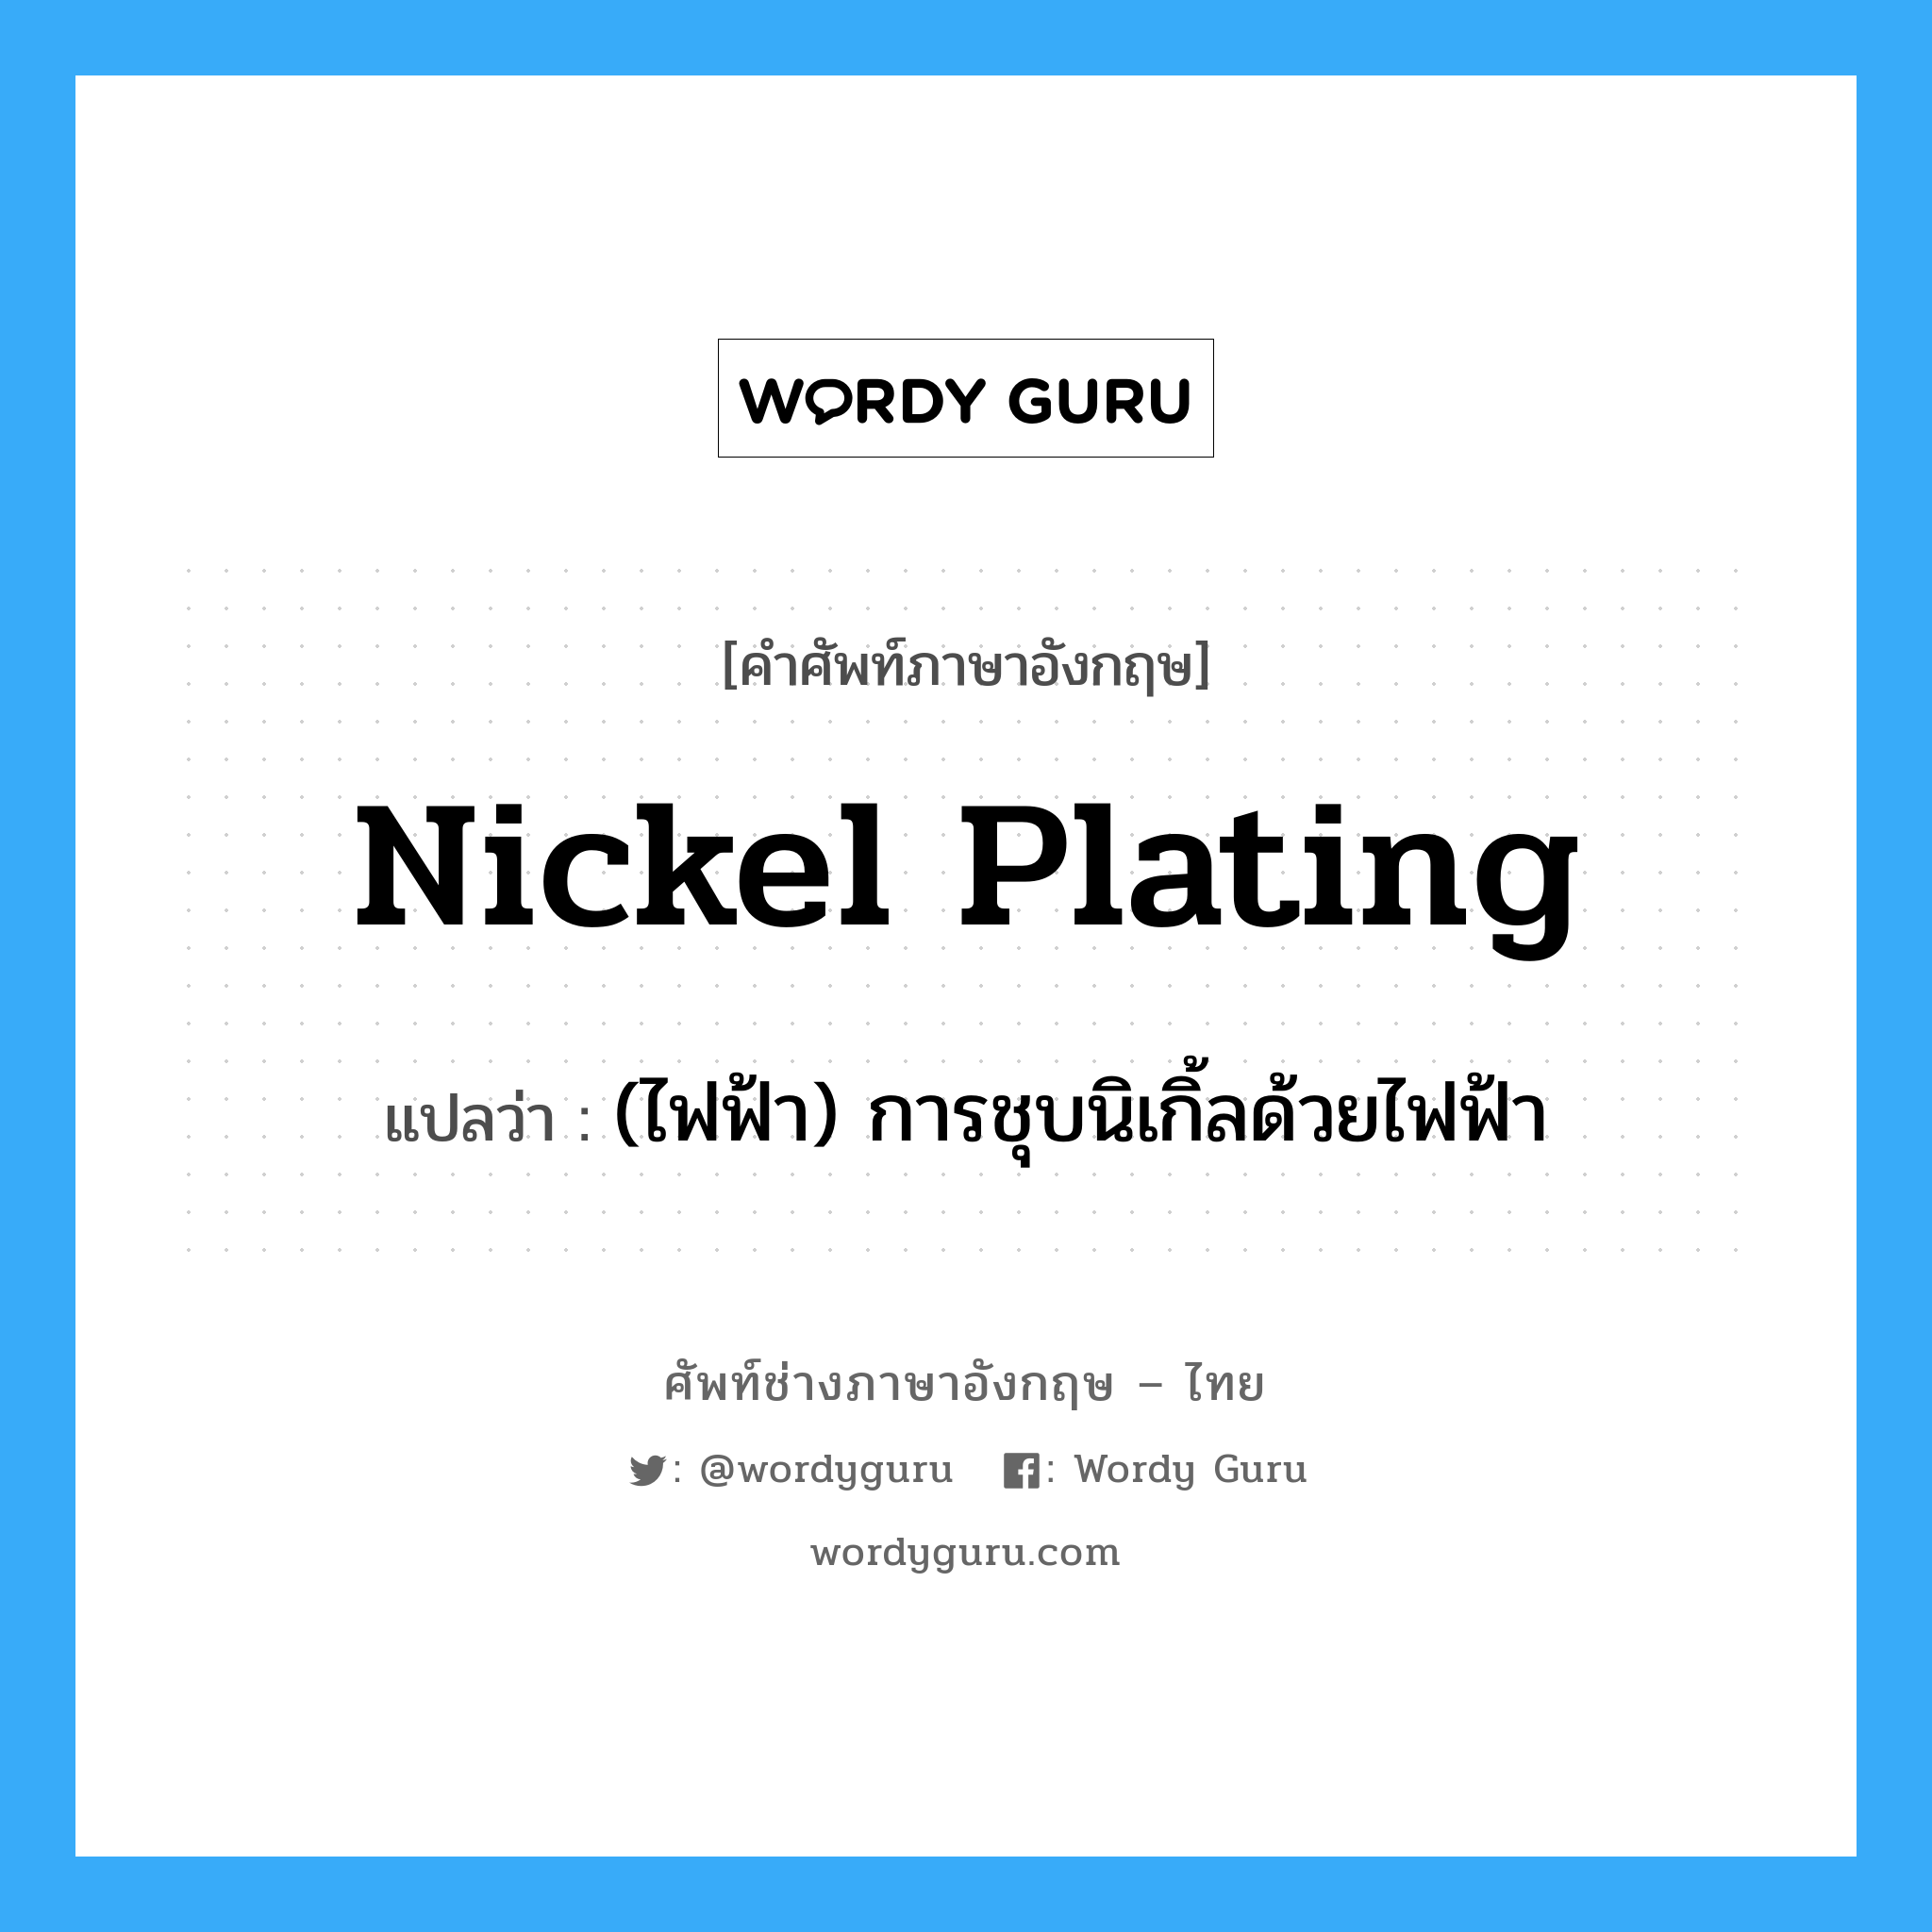 nickel plating แปลว่า?, คำศัพท์ช่างภาษาอังกฤษ - ไทย nickel plating คำศัพท์ภาษาอังกฤษ nickel plating แปลว่า (ไฟฟ้า) การชุบนิเกิ้ลด้วยไฟฟ้า